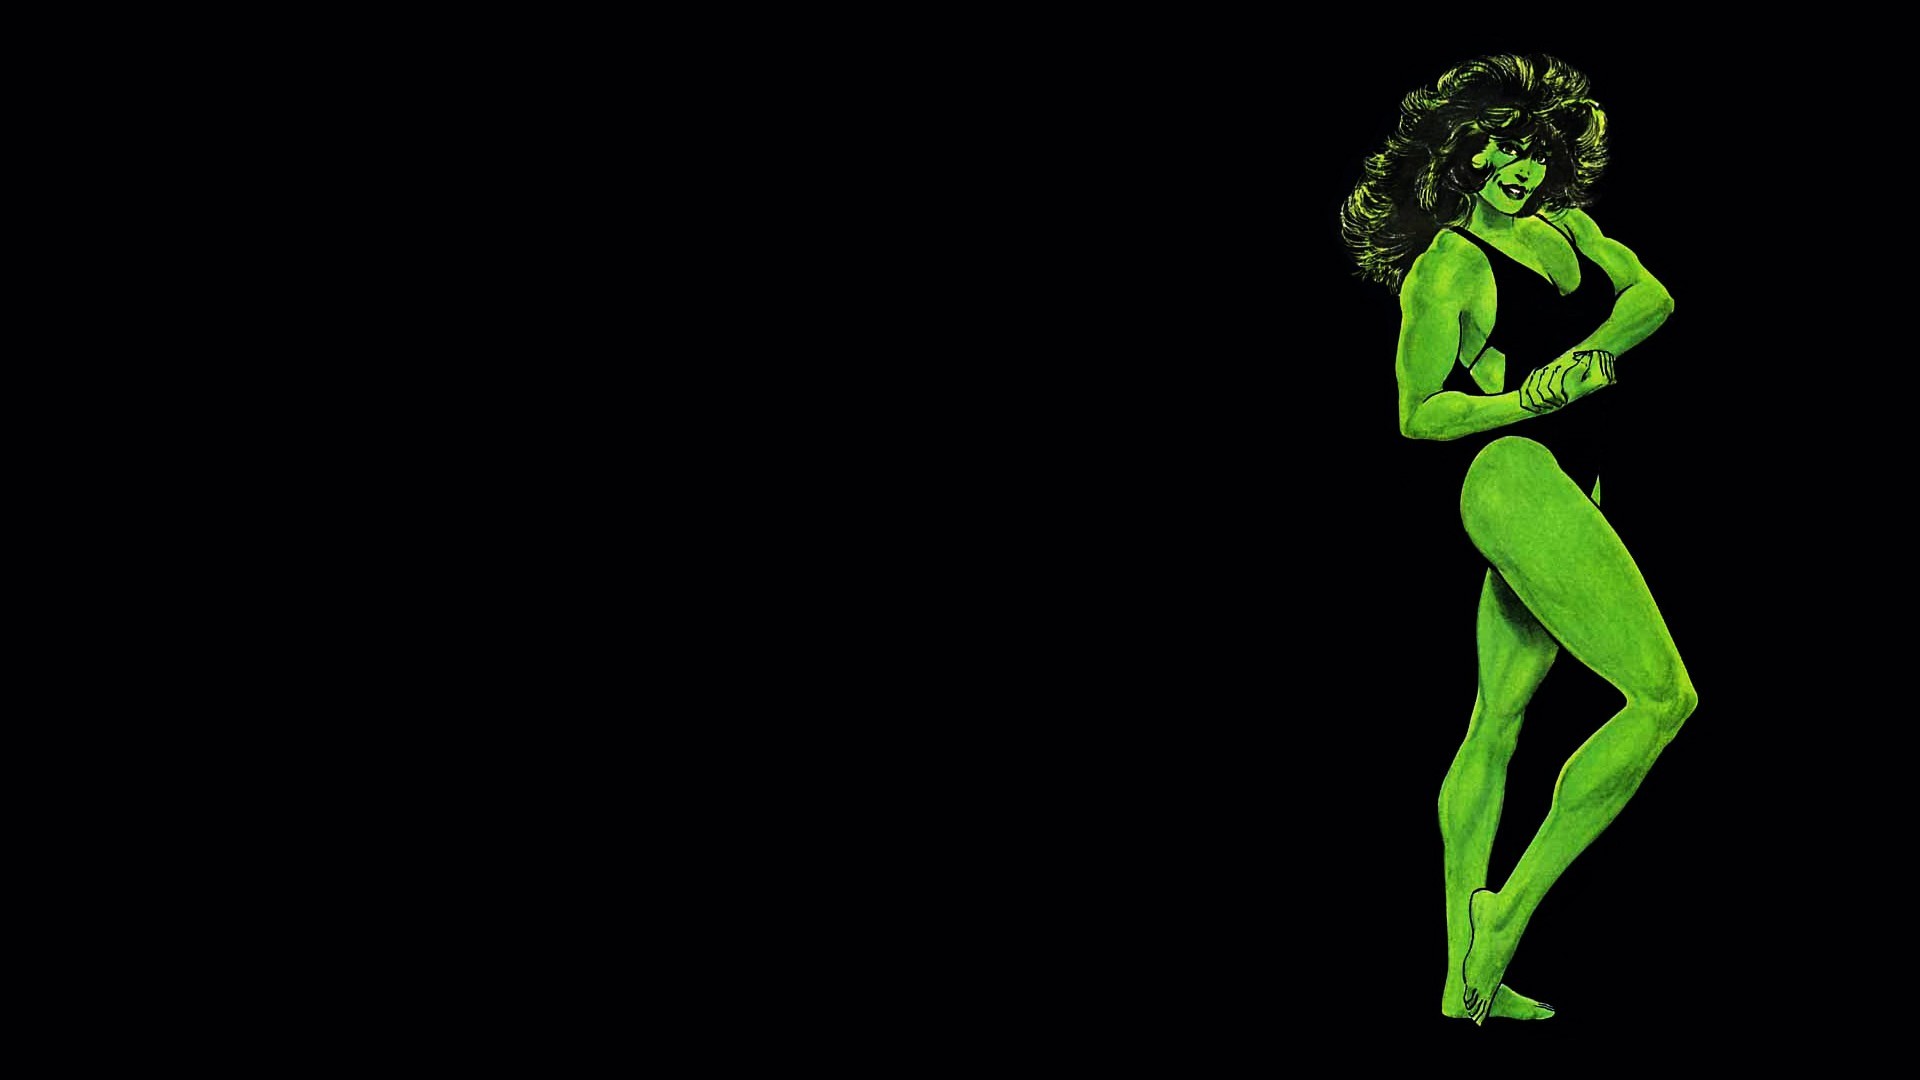 She Hulk images She Hulk – Barefoot HD wallpaper and background photos